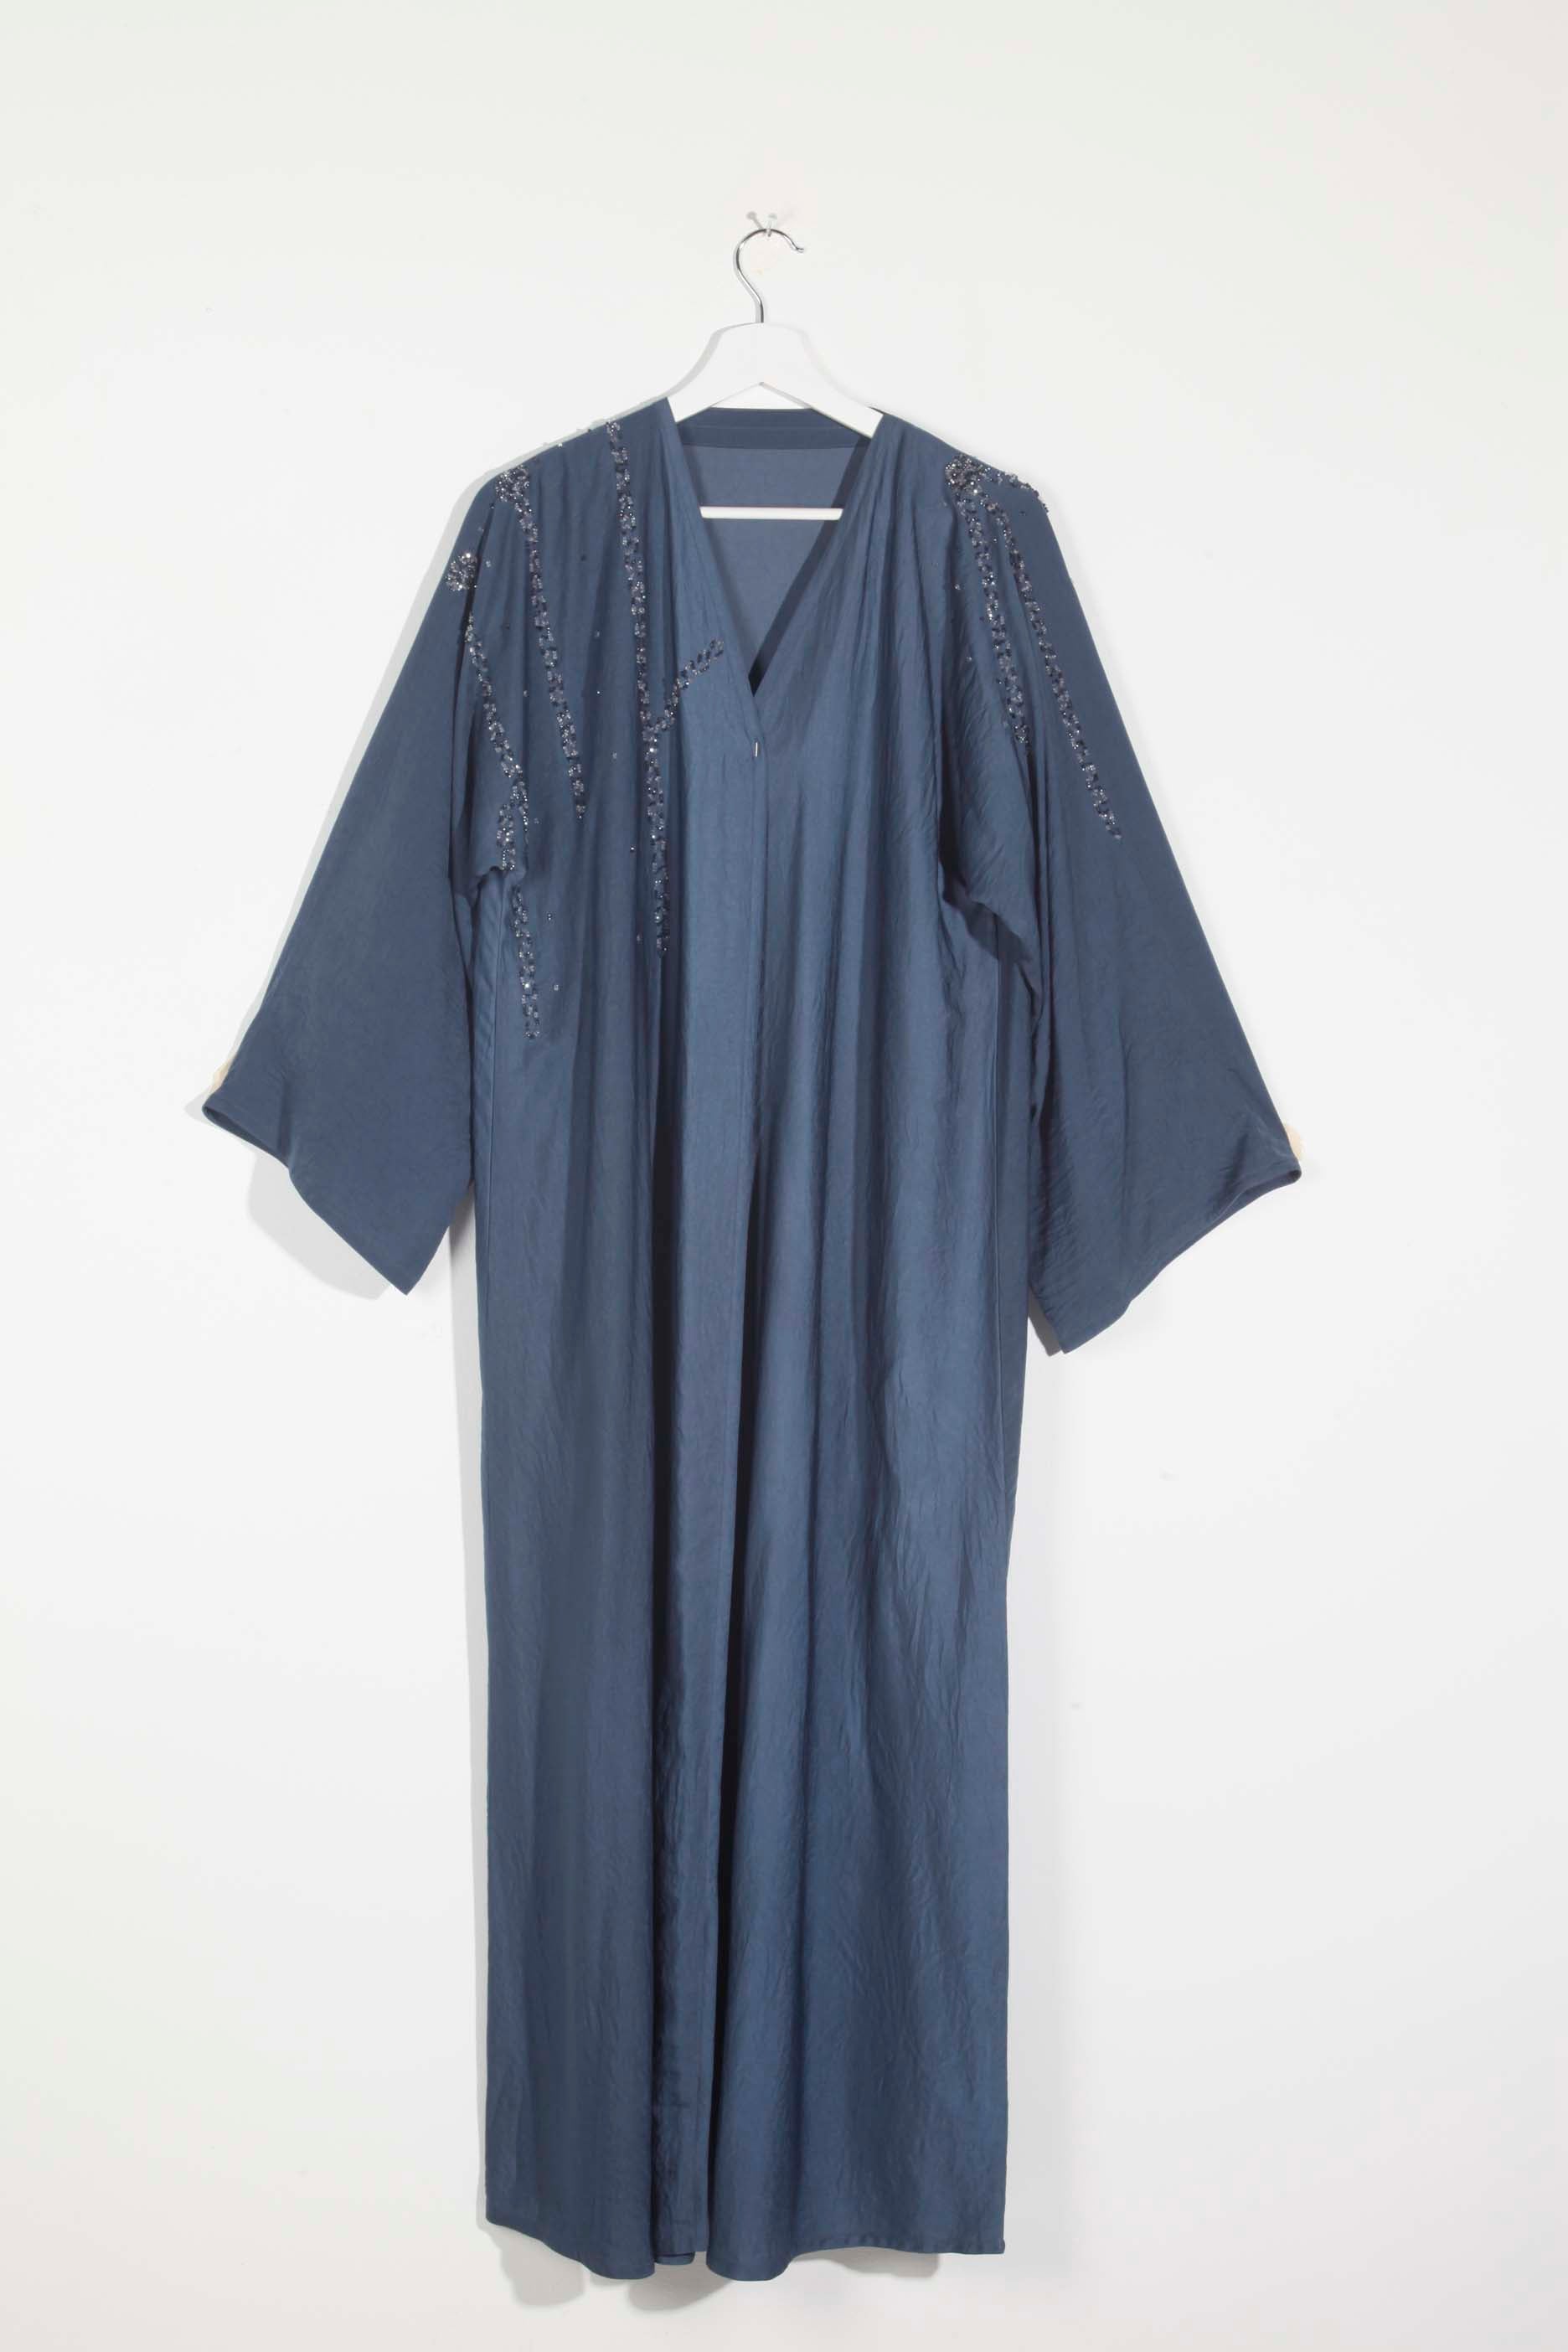 Navy blue abaya with beading